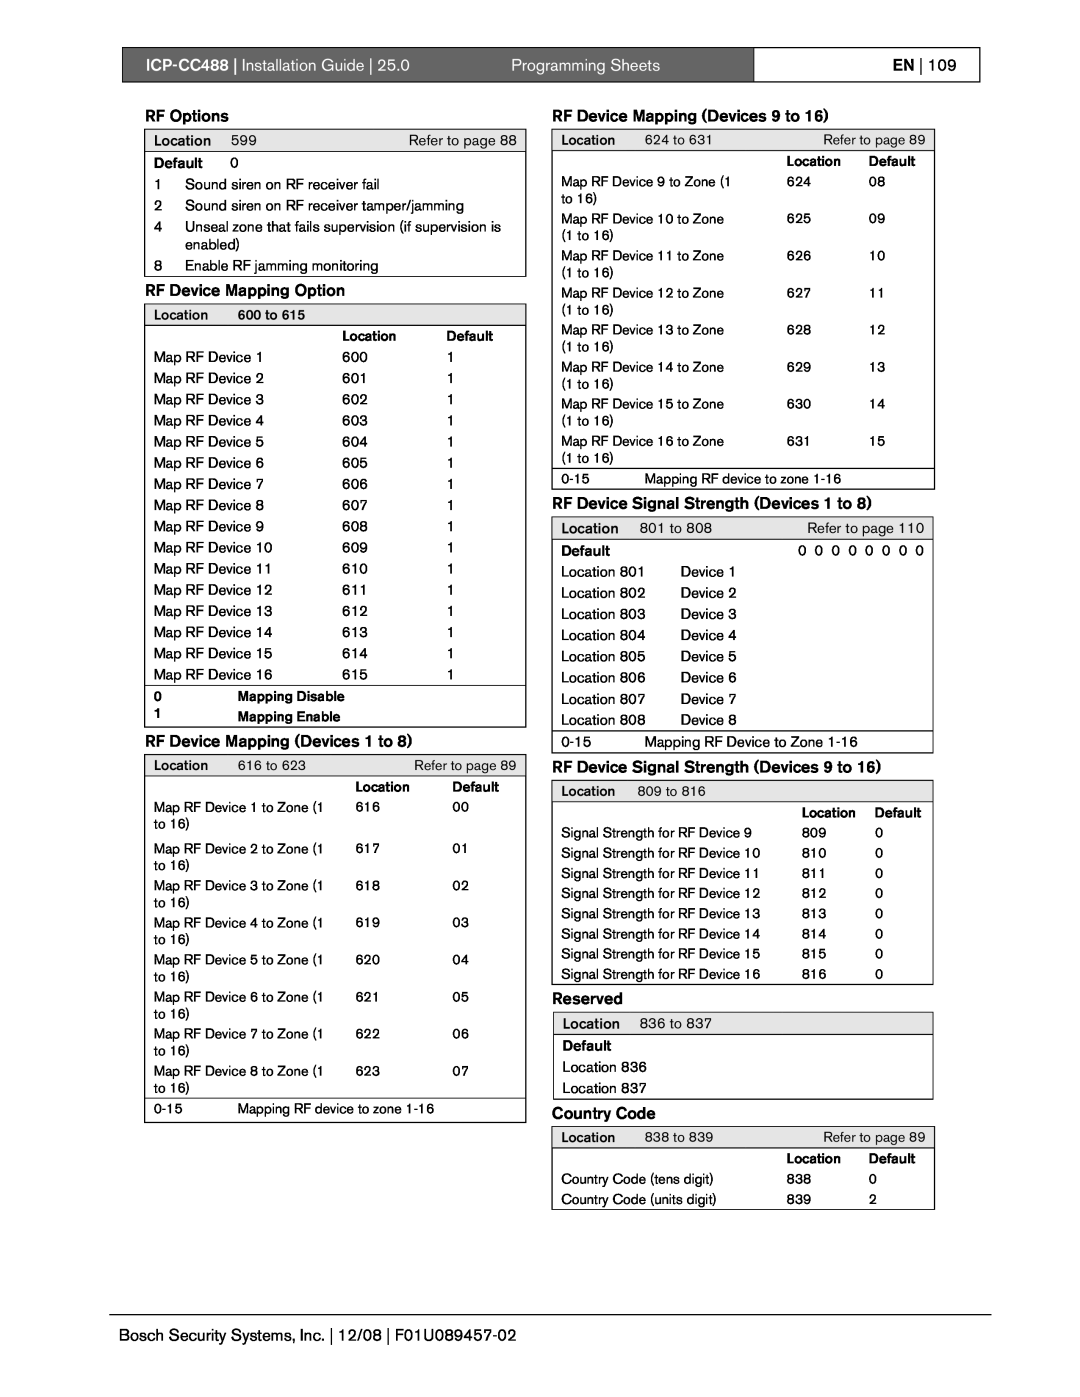 Bosch Appliances manual ICP-CC488| Installation Guide, Programming Sheets, En 